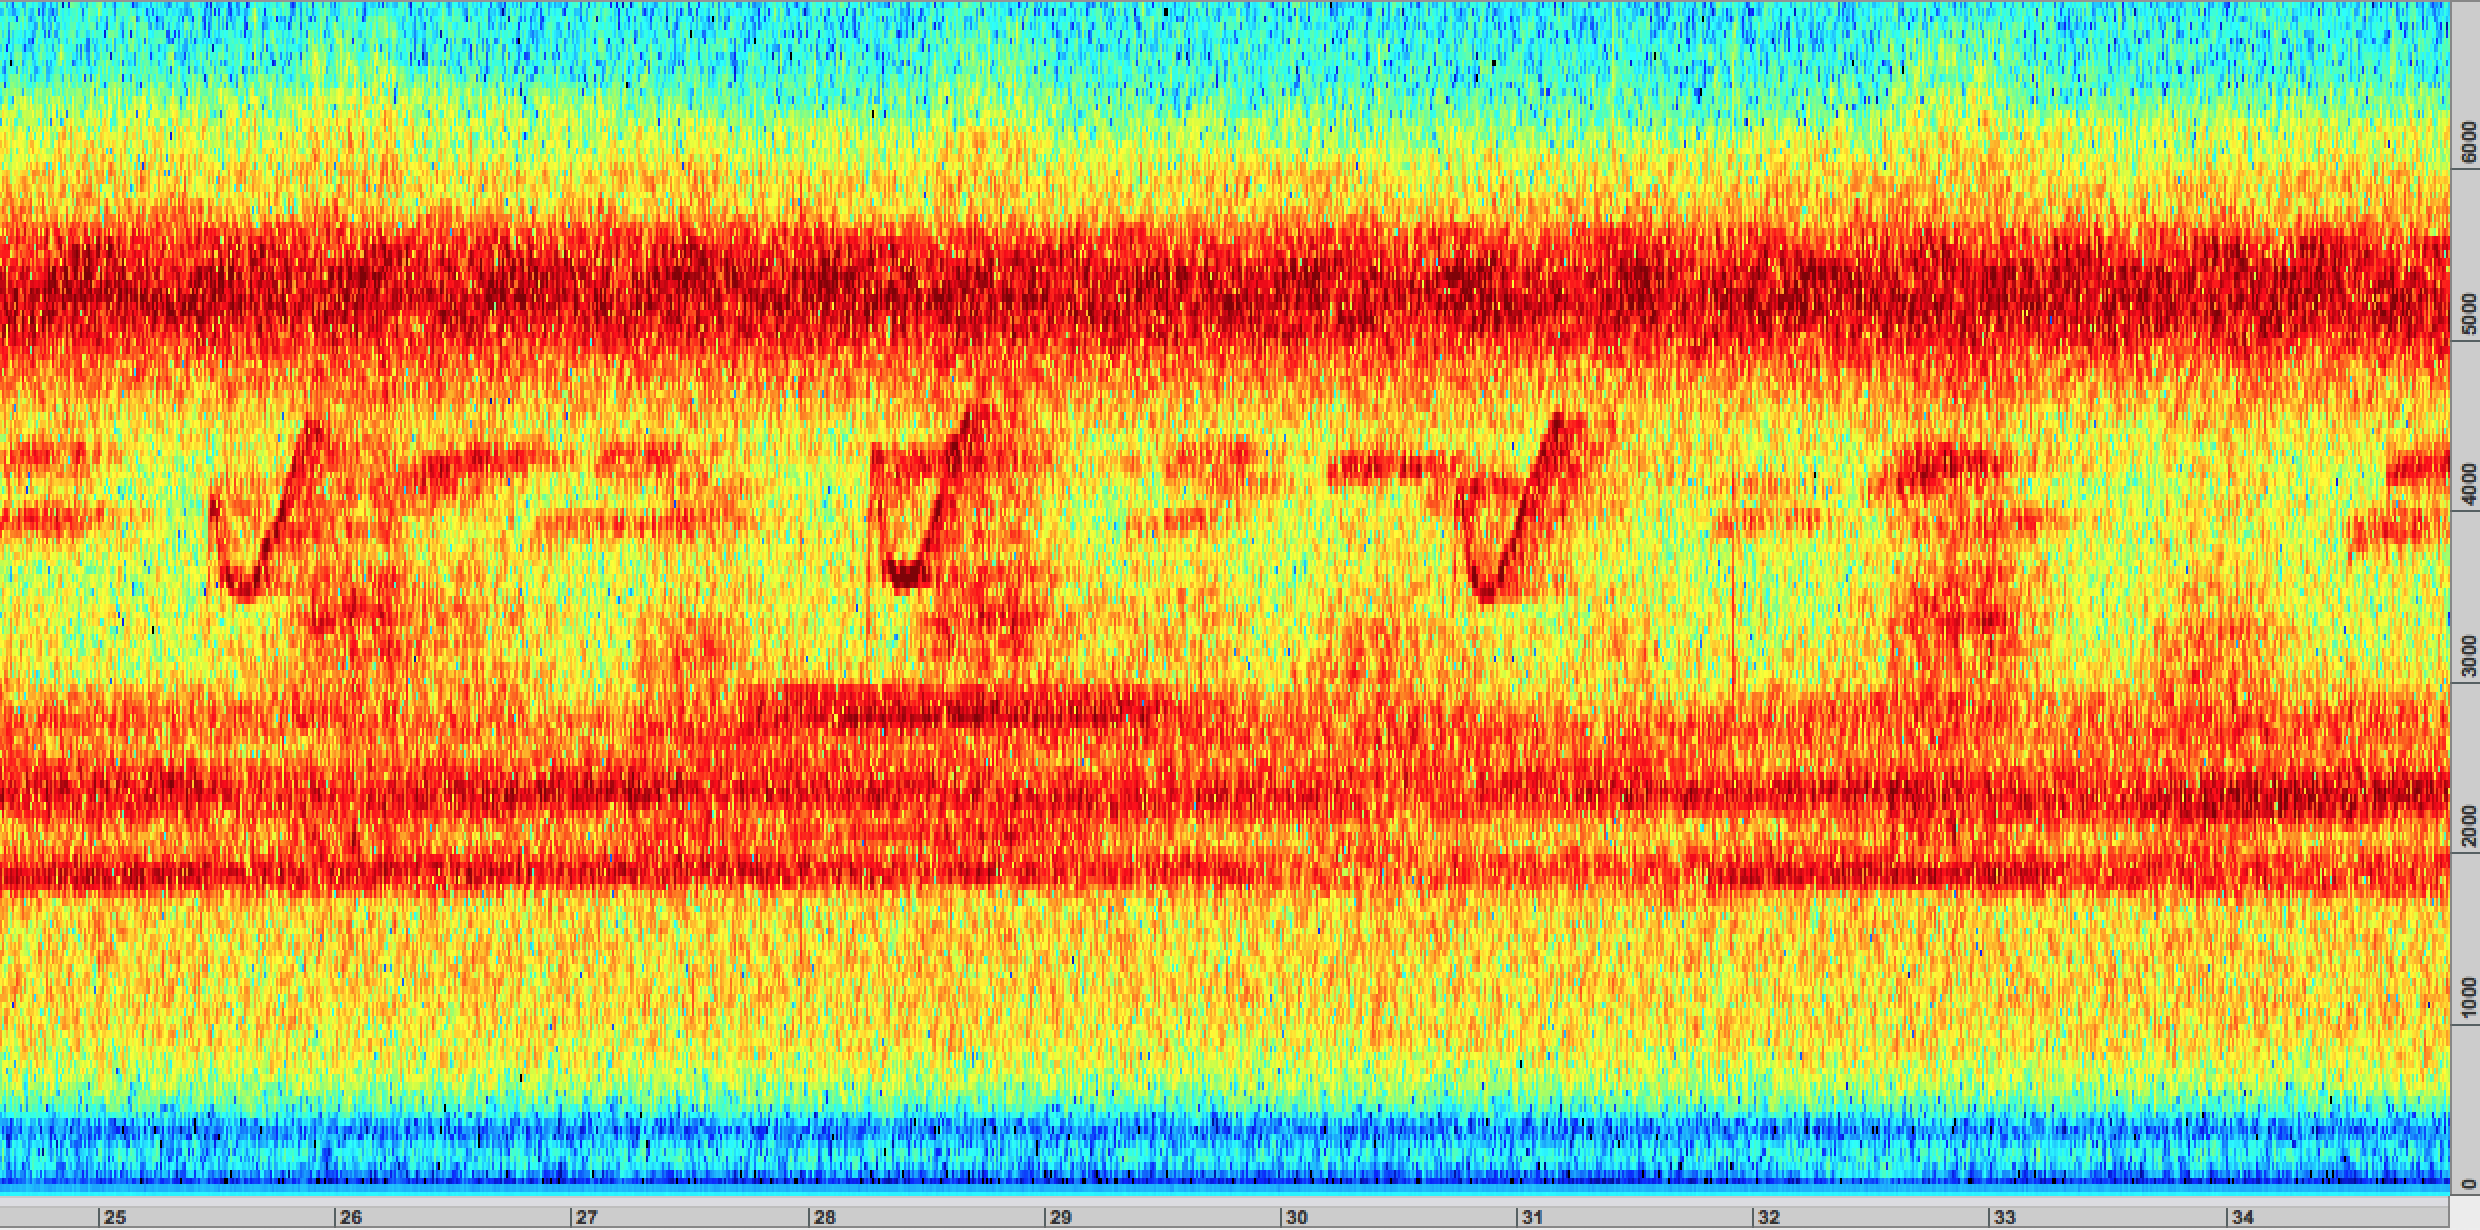 Espectrograma de Night Music por Christopher Luna